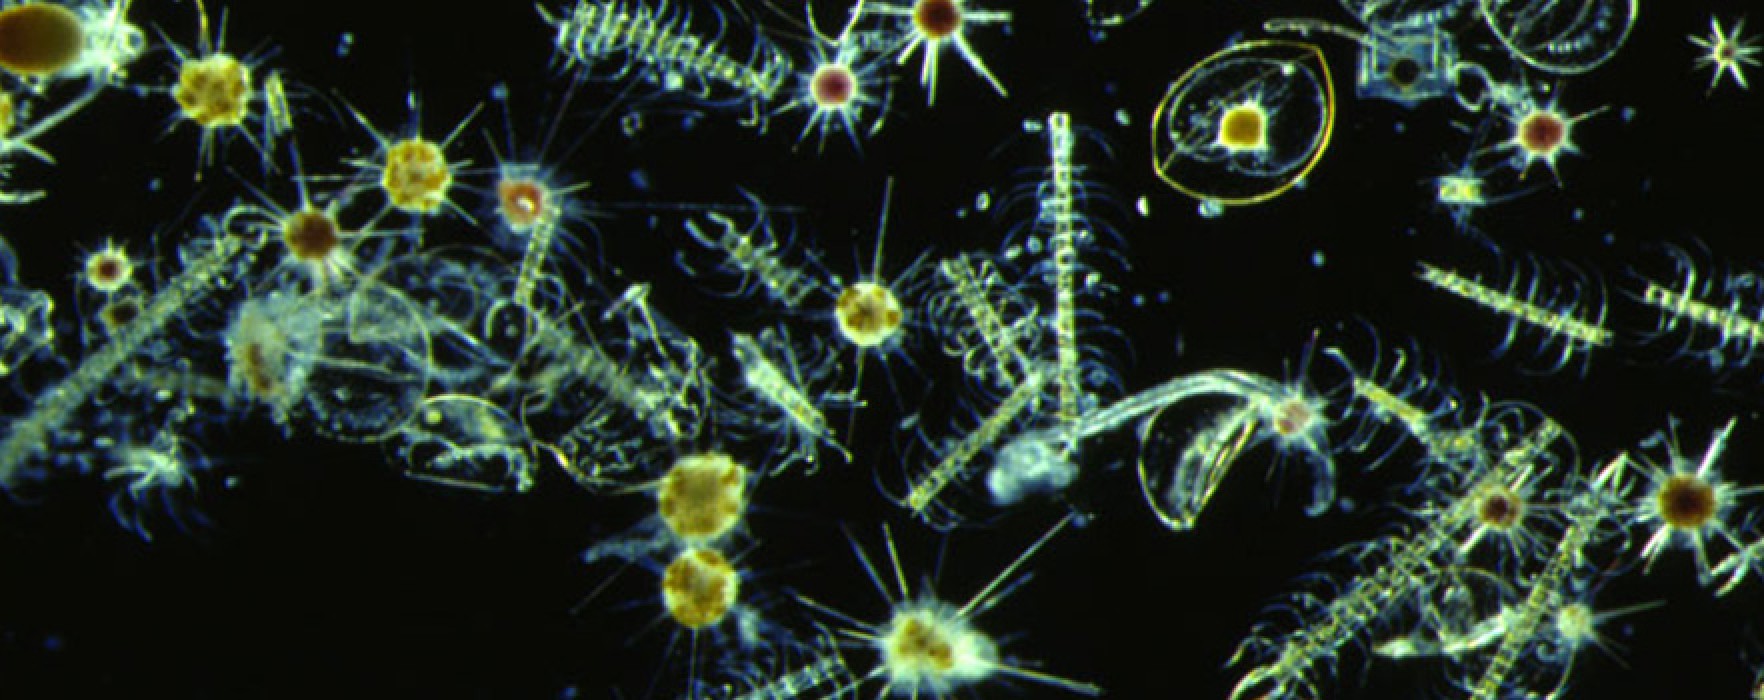 Atmosferi Koruyucu Fitoplanktonlar